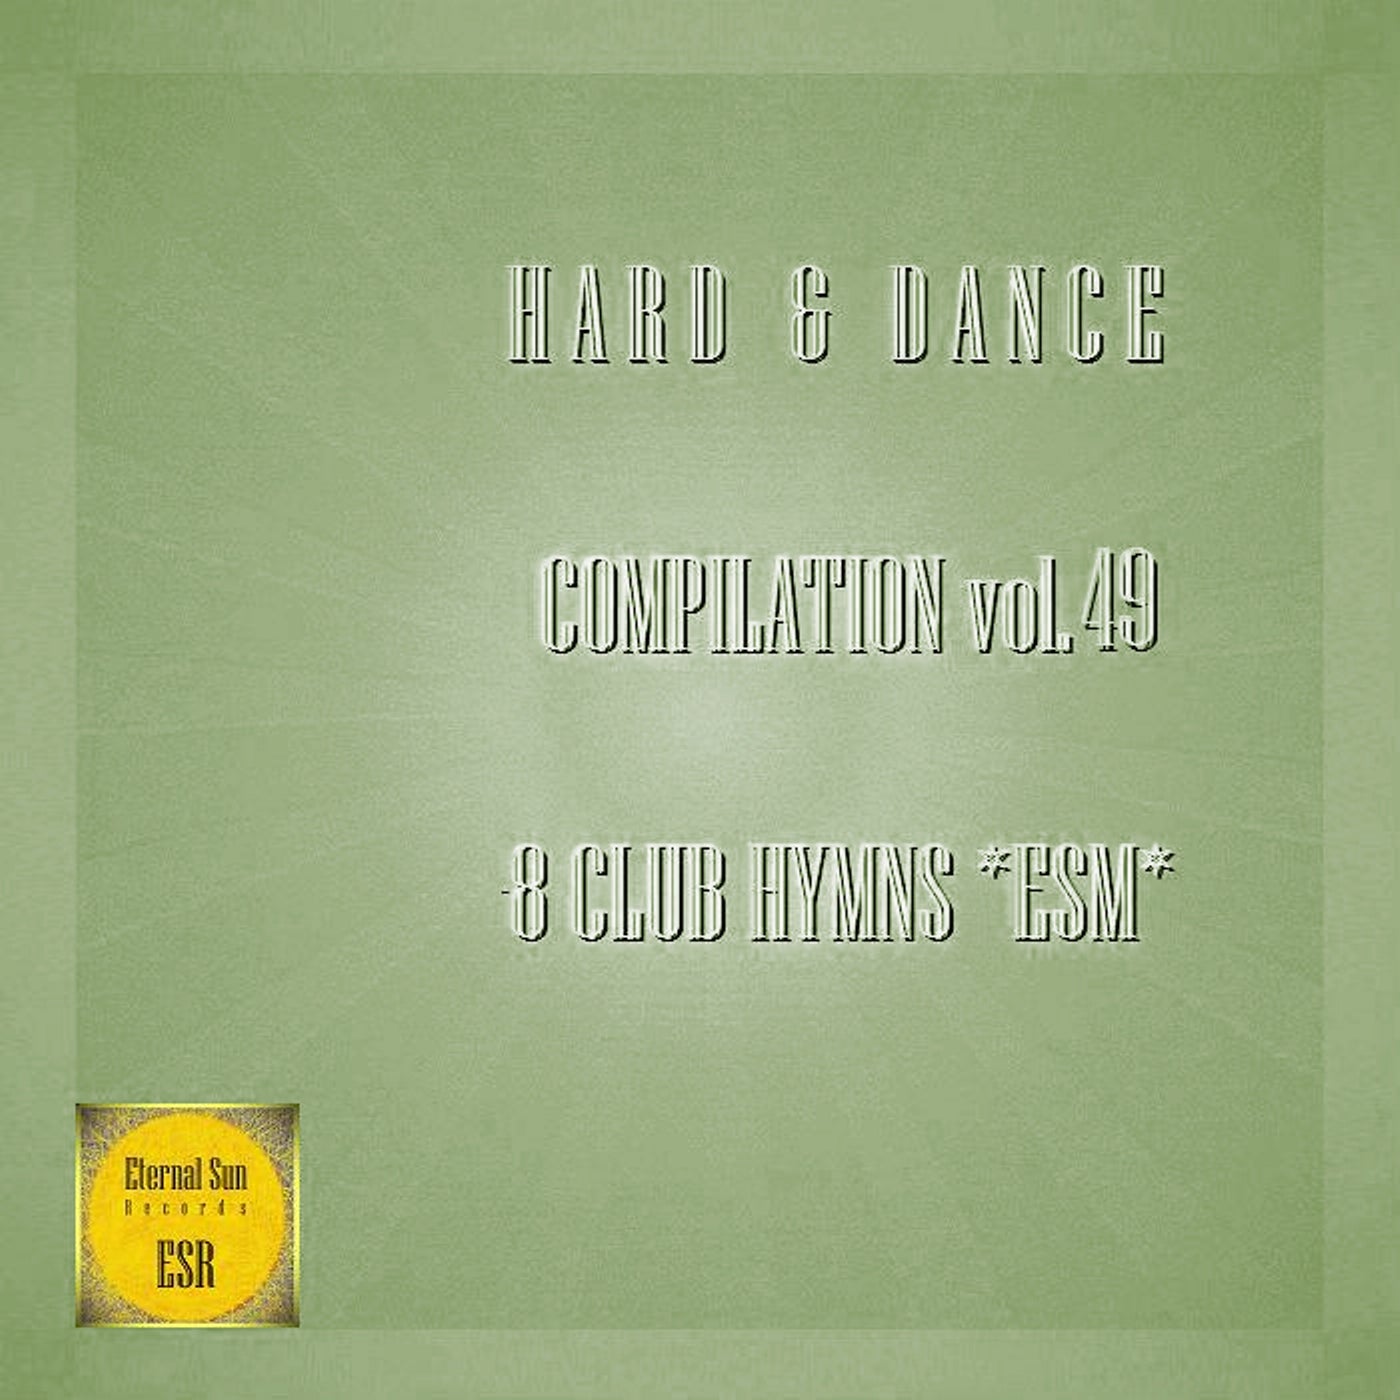 Hard & Dance Compilation vol. 49 - 8 Club Hymns ESM